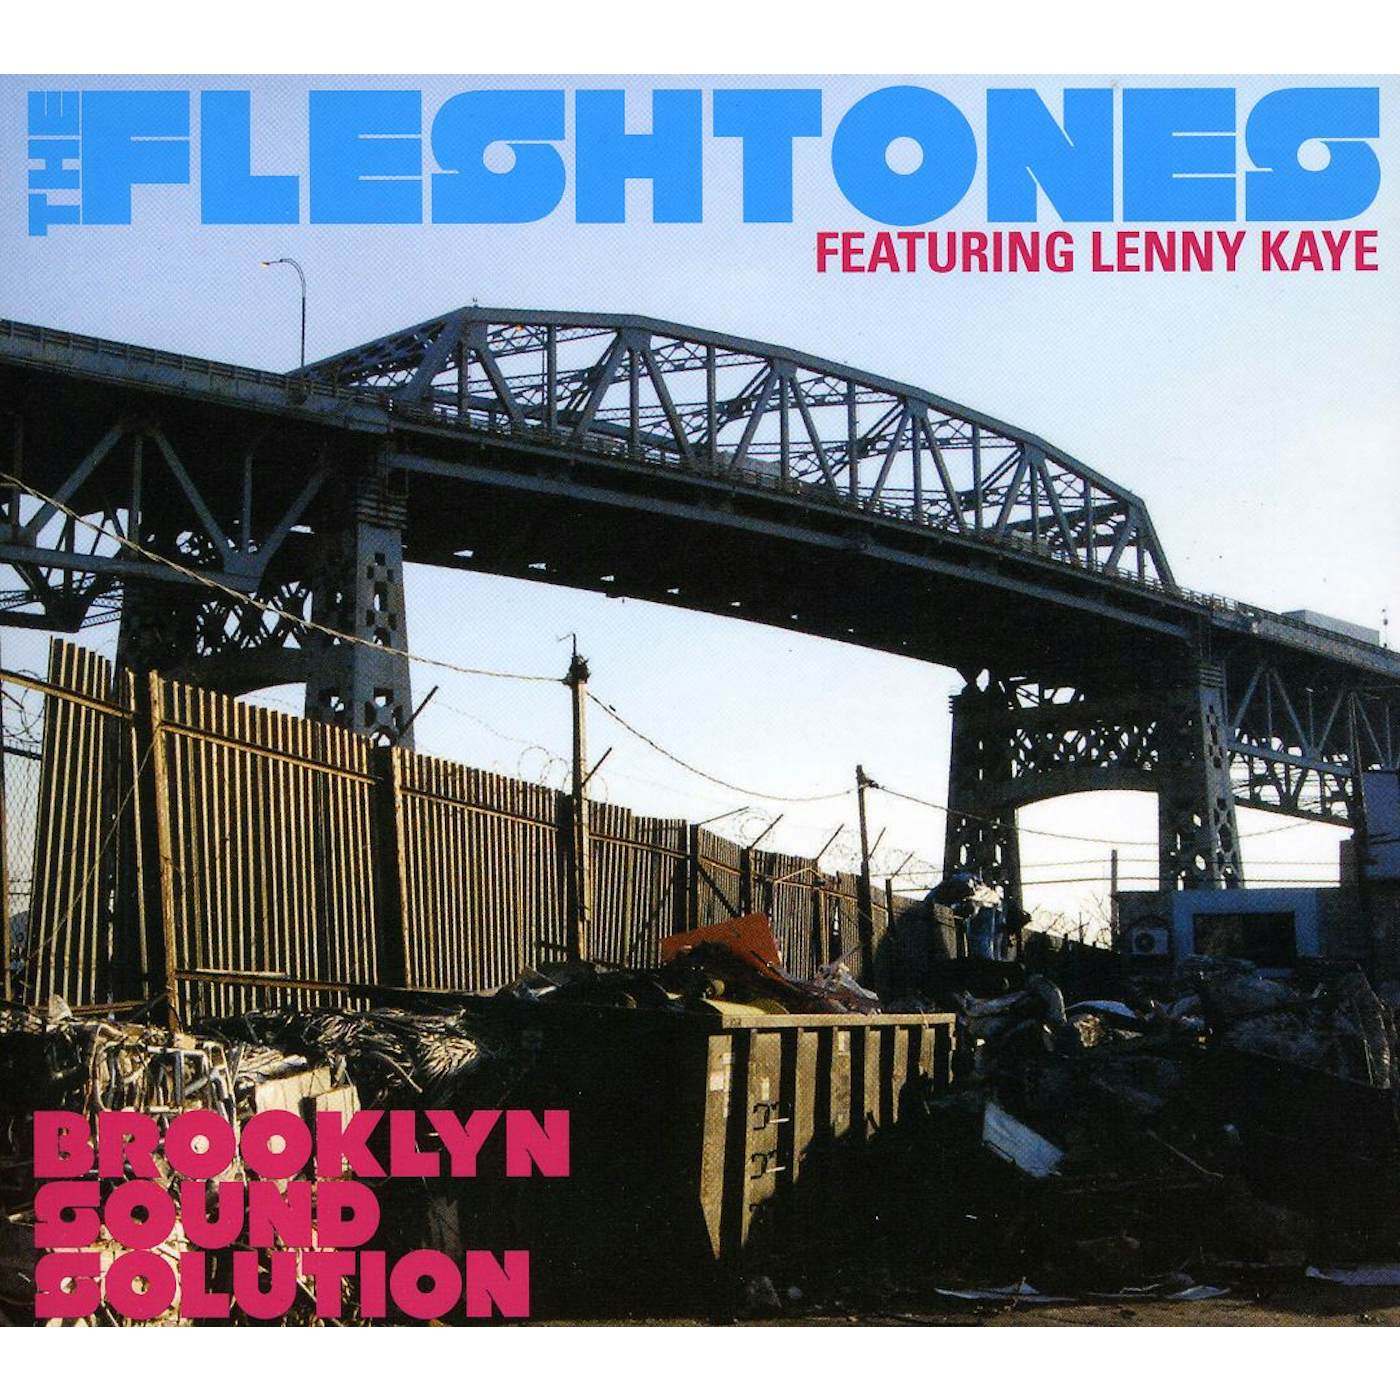 The Fleshtones BROOKLYN SOUND SOLUTION CD